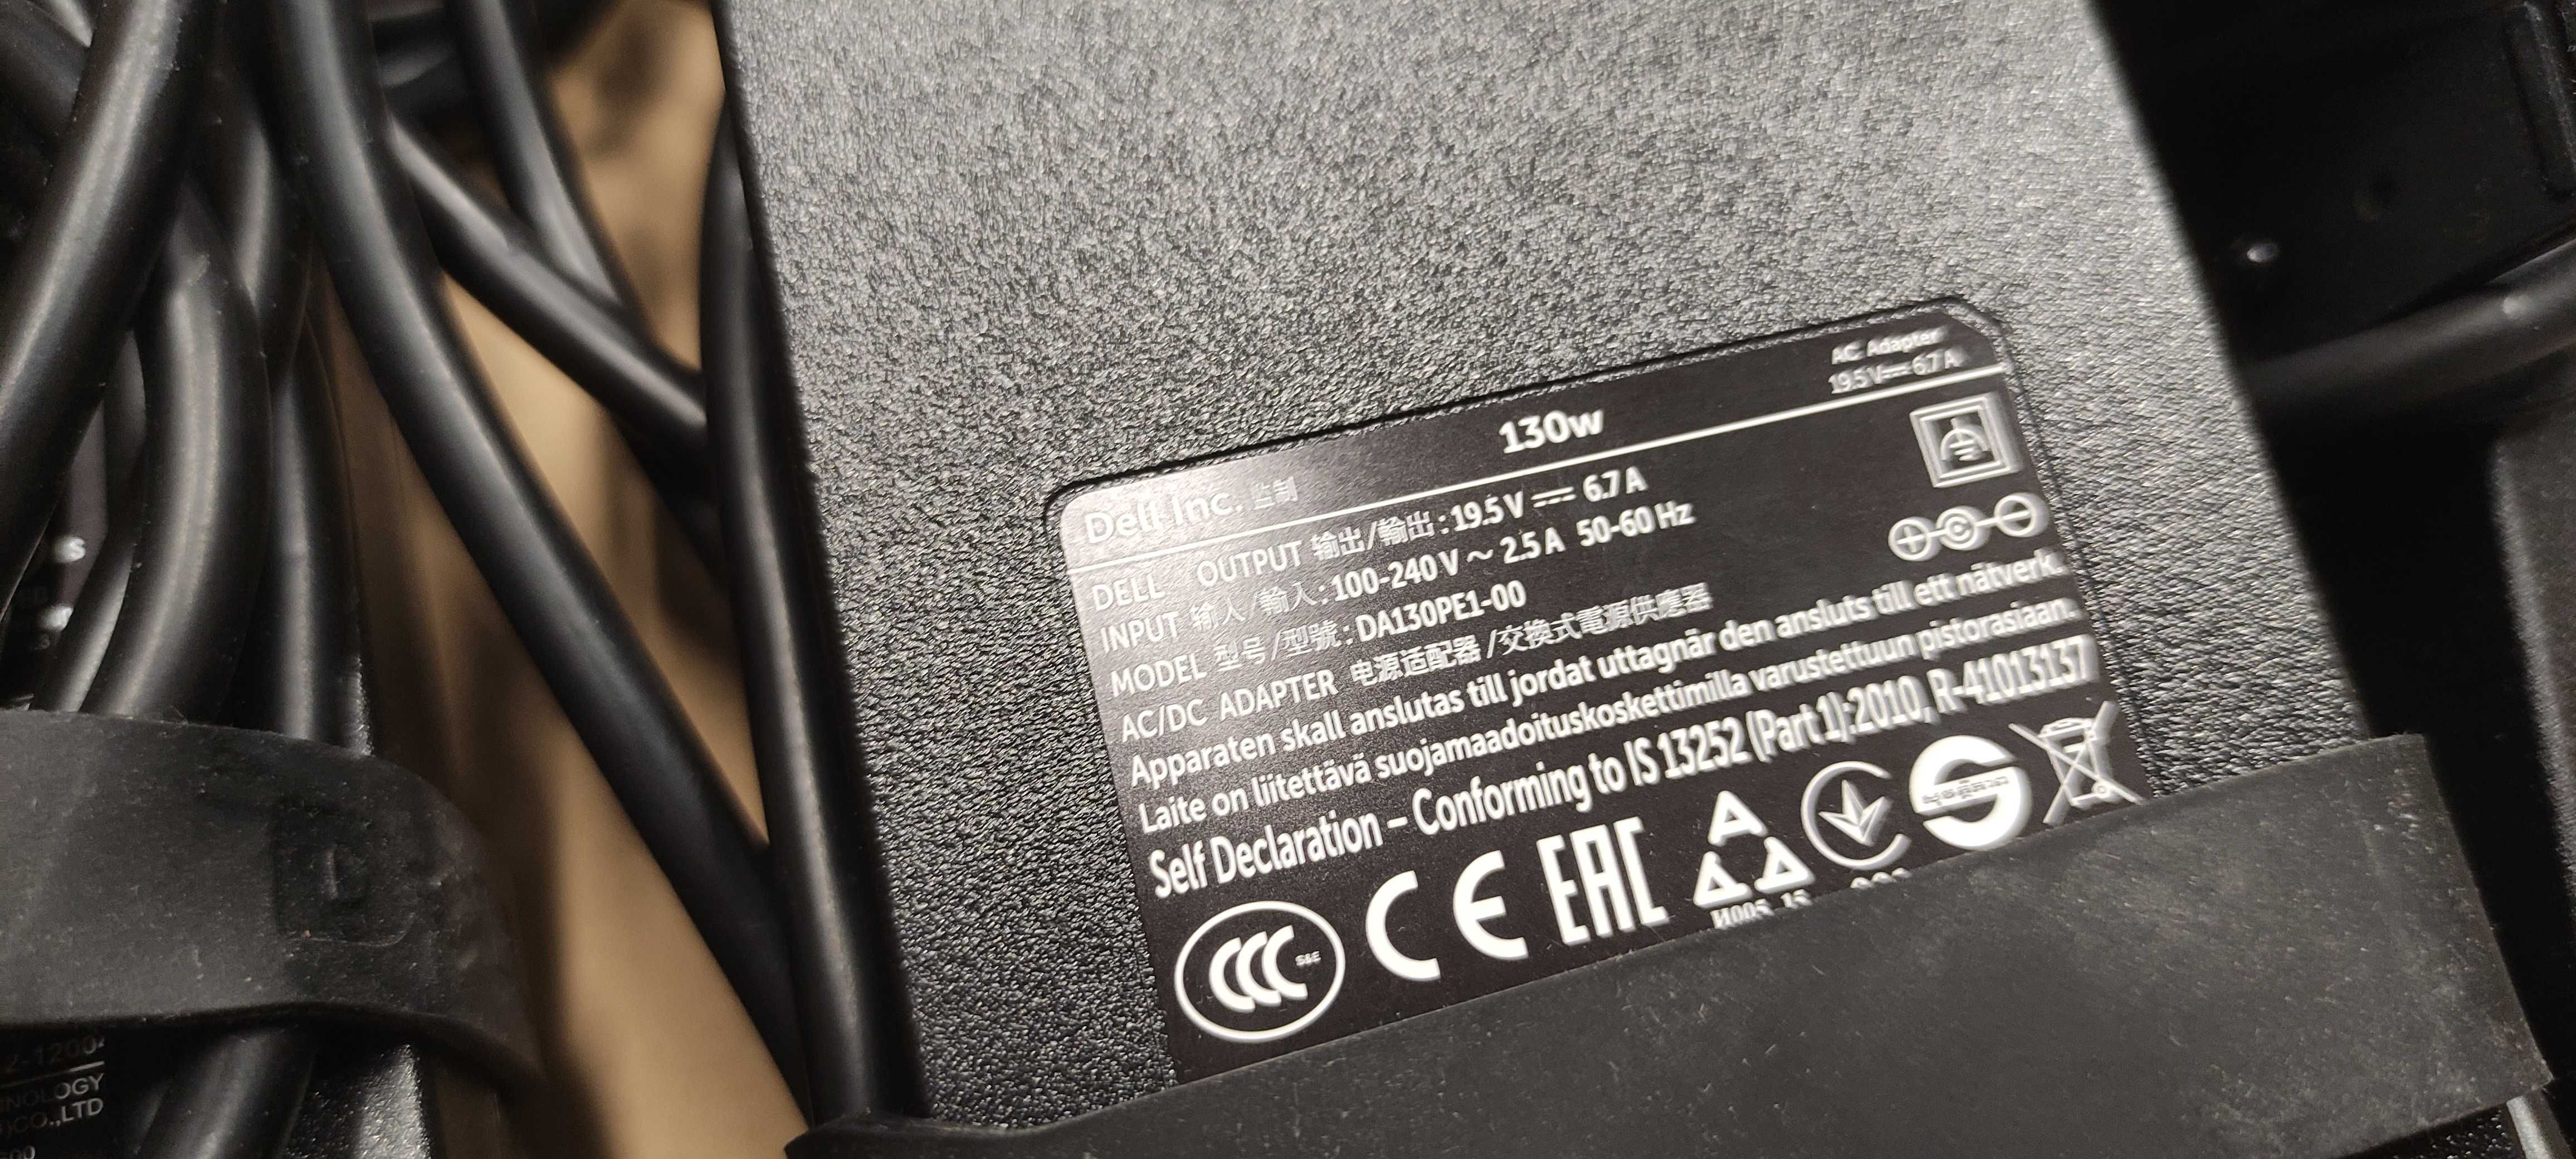 10 szt. ładowarek Dell 130W 7.4mm LA130PM121